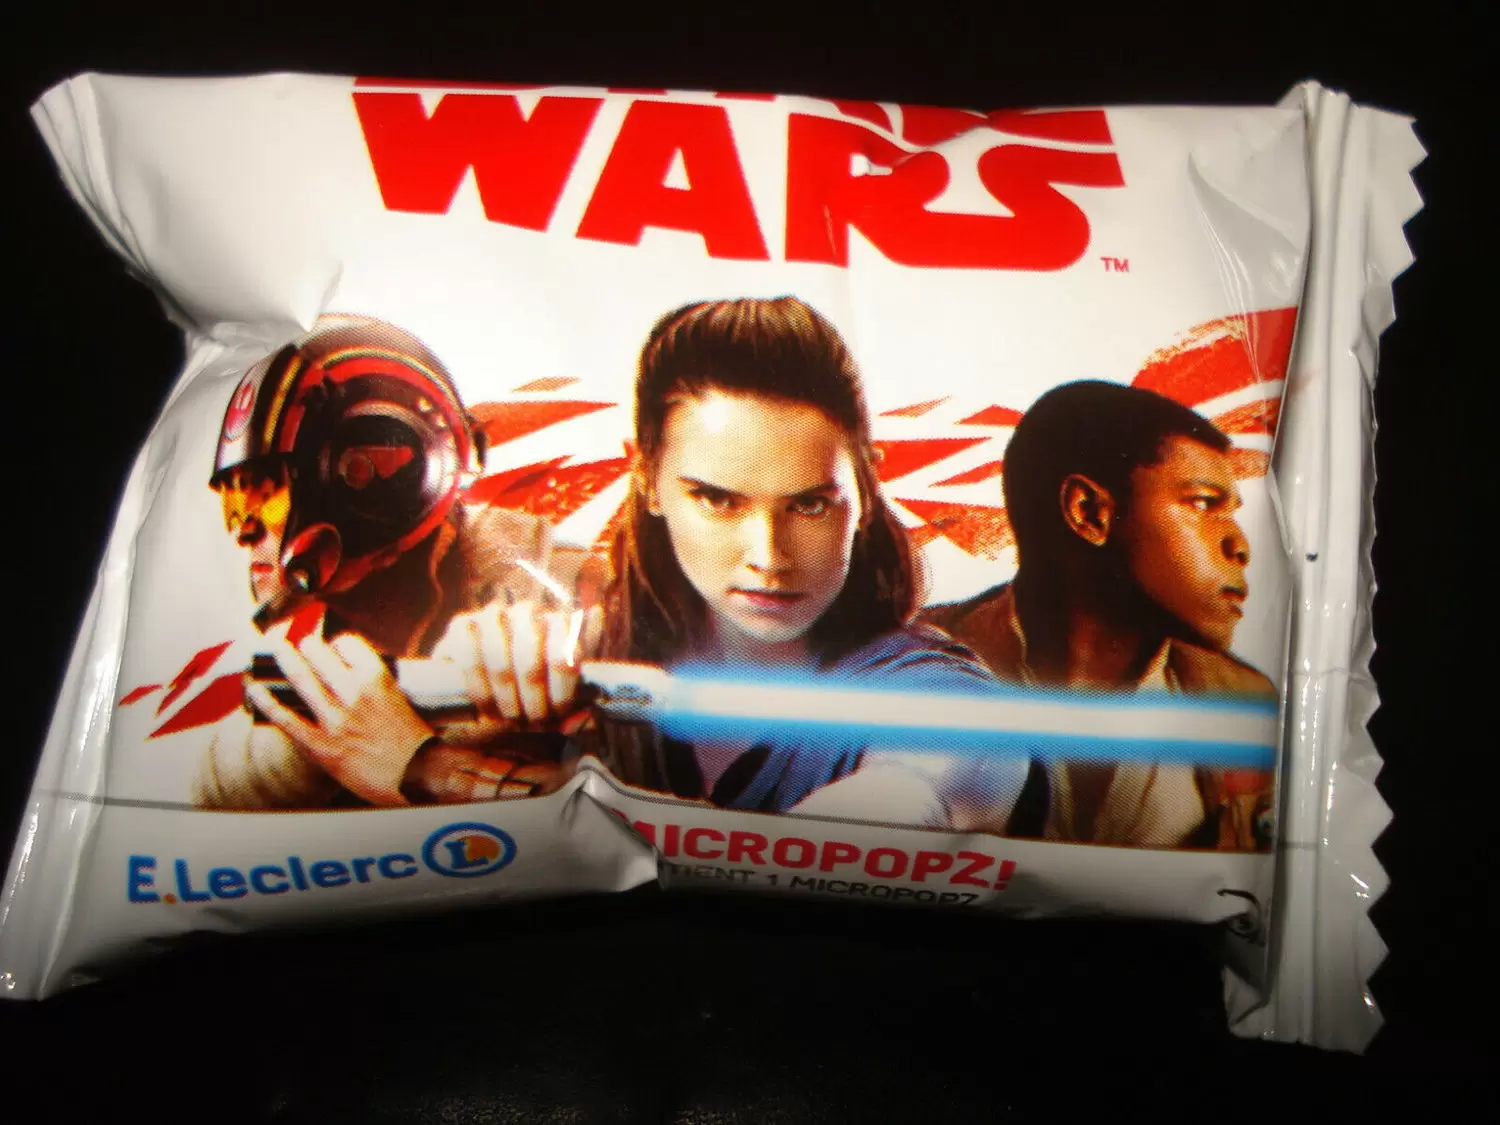 Micropopz Star Wars Leclerc - Blind bag